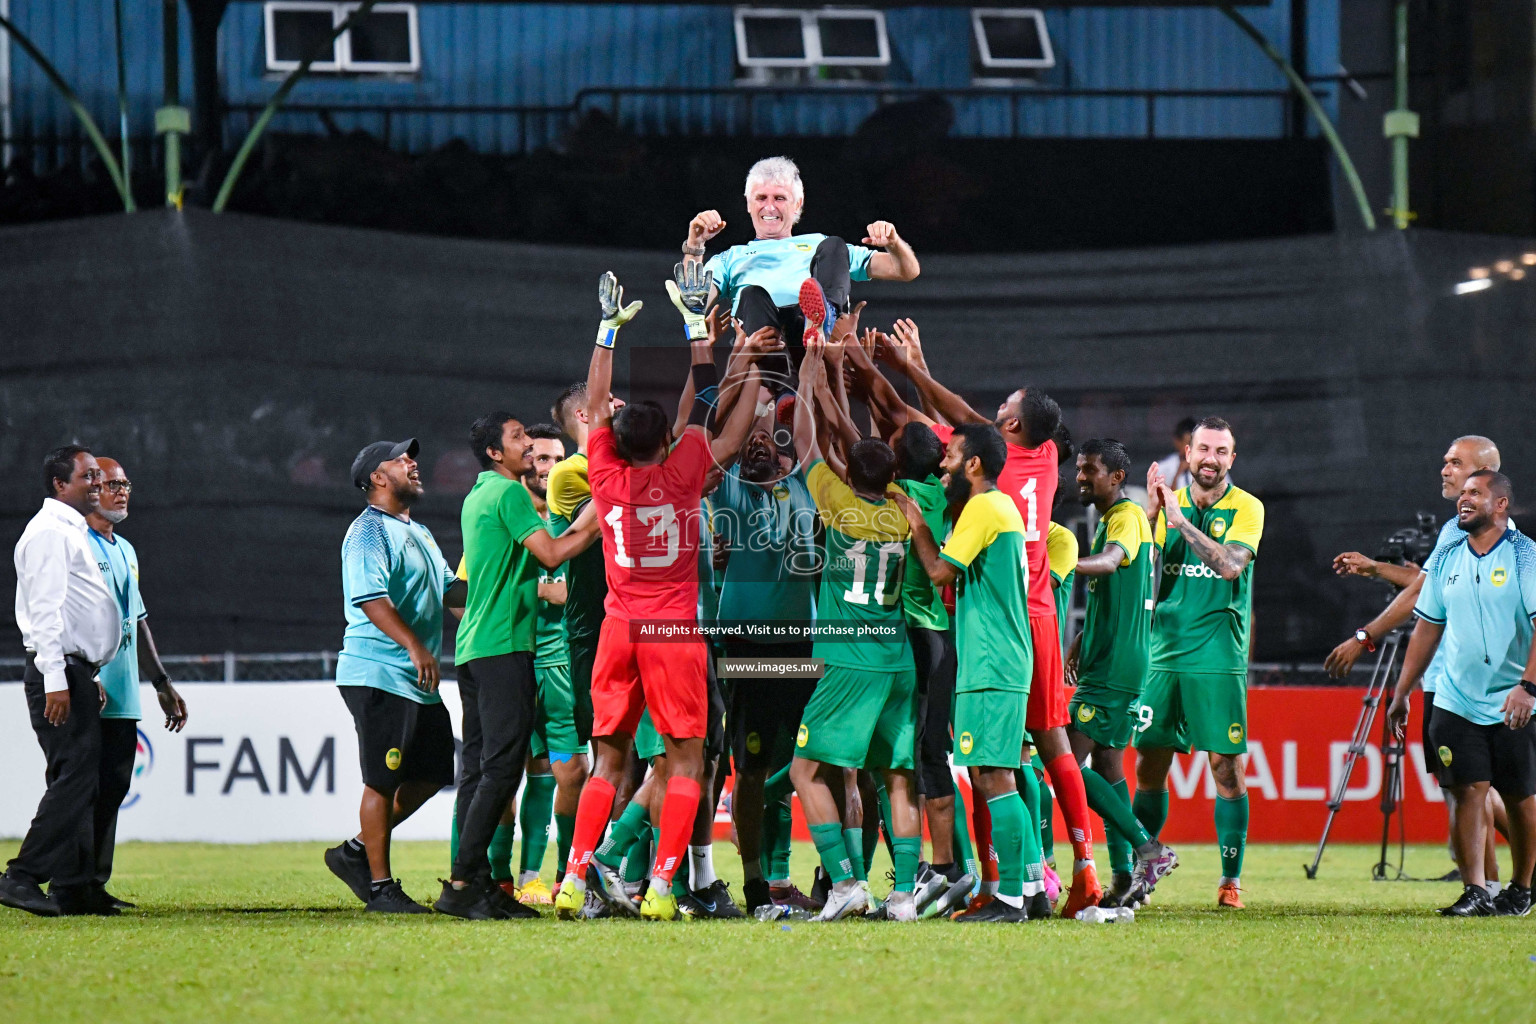 President's Cup 2023 Final - Maziya Sports & Recreation vs Club Eagles, held in National Football Stadium, Male', Maldives  Photos: Nausham Waheed/ Images.mv